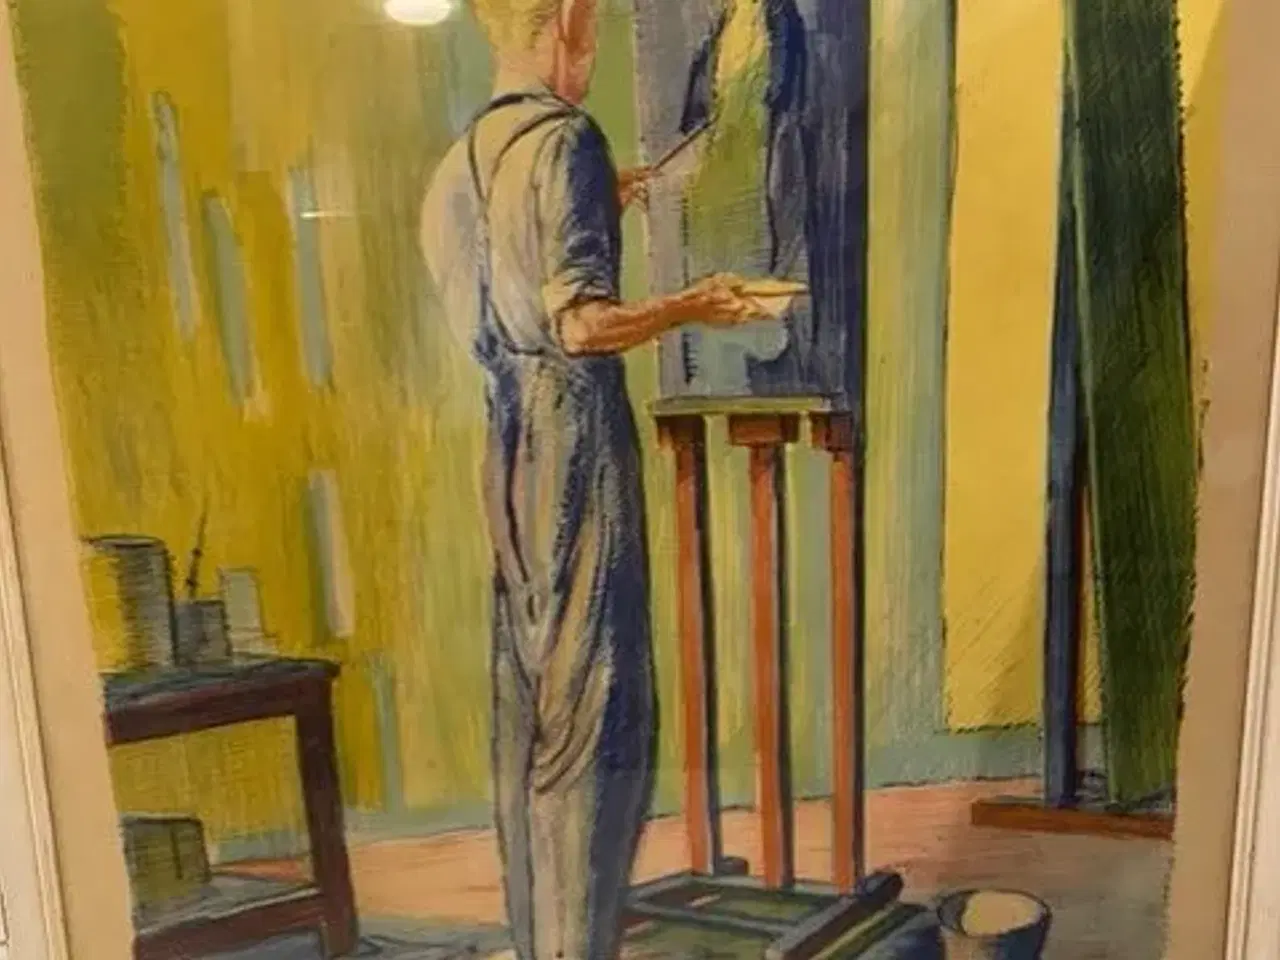 Billede 1 - Staffeli maler - Aksel Jørgensen 1953